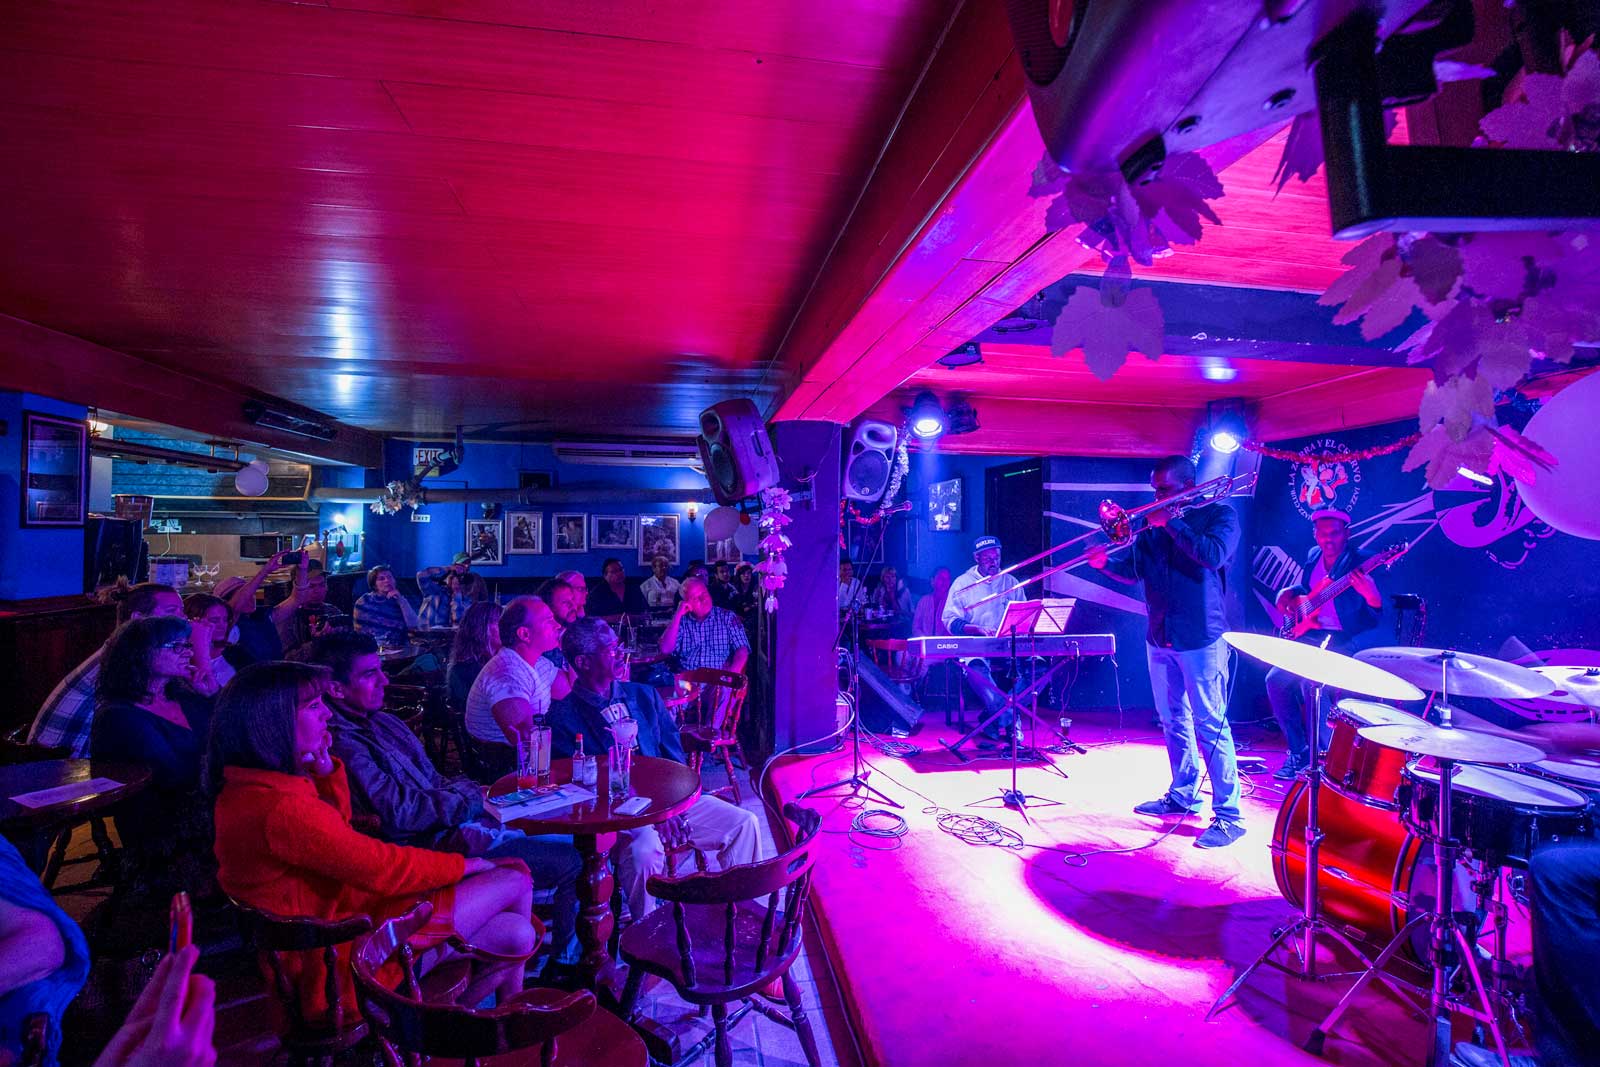 crowd watching jazz musicians perform at night club